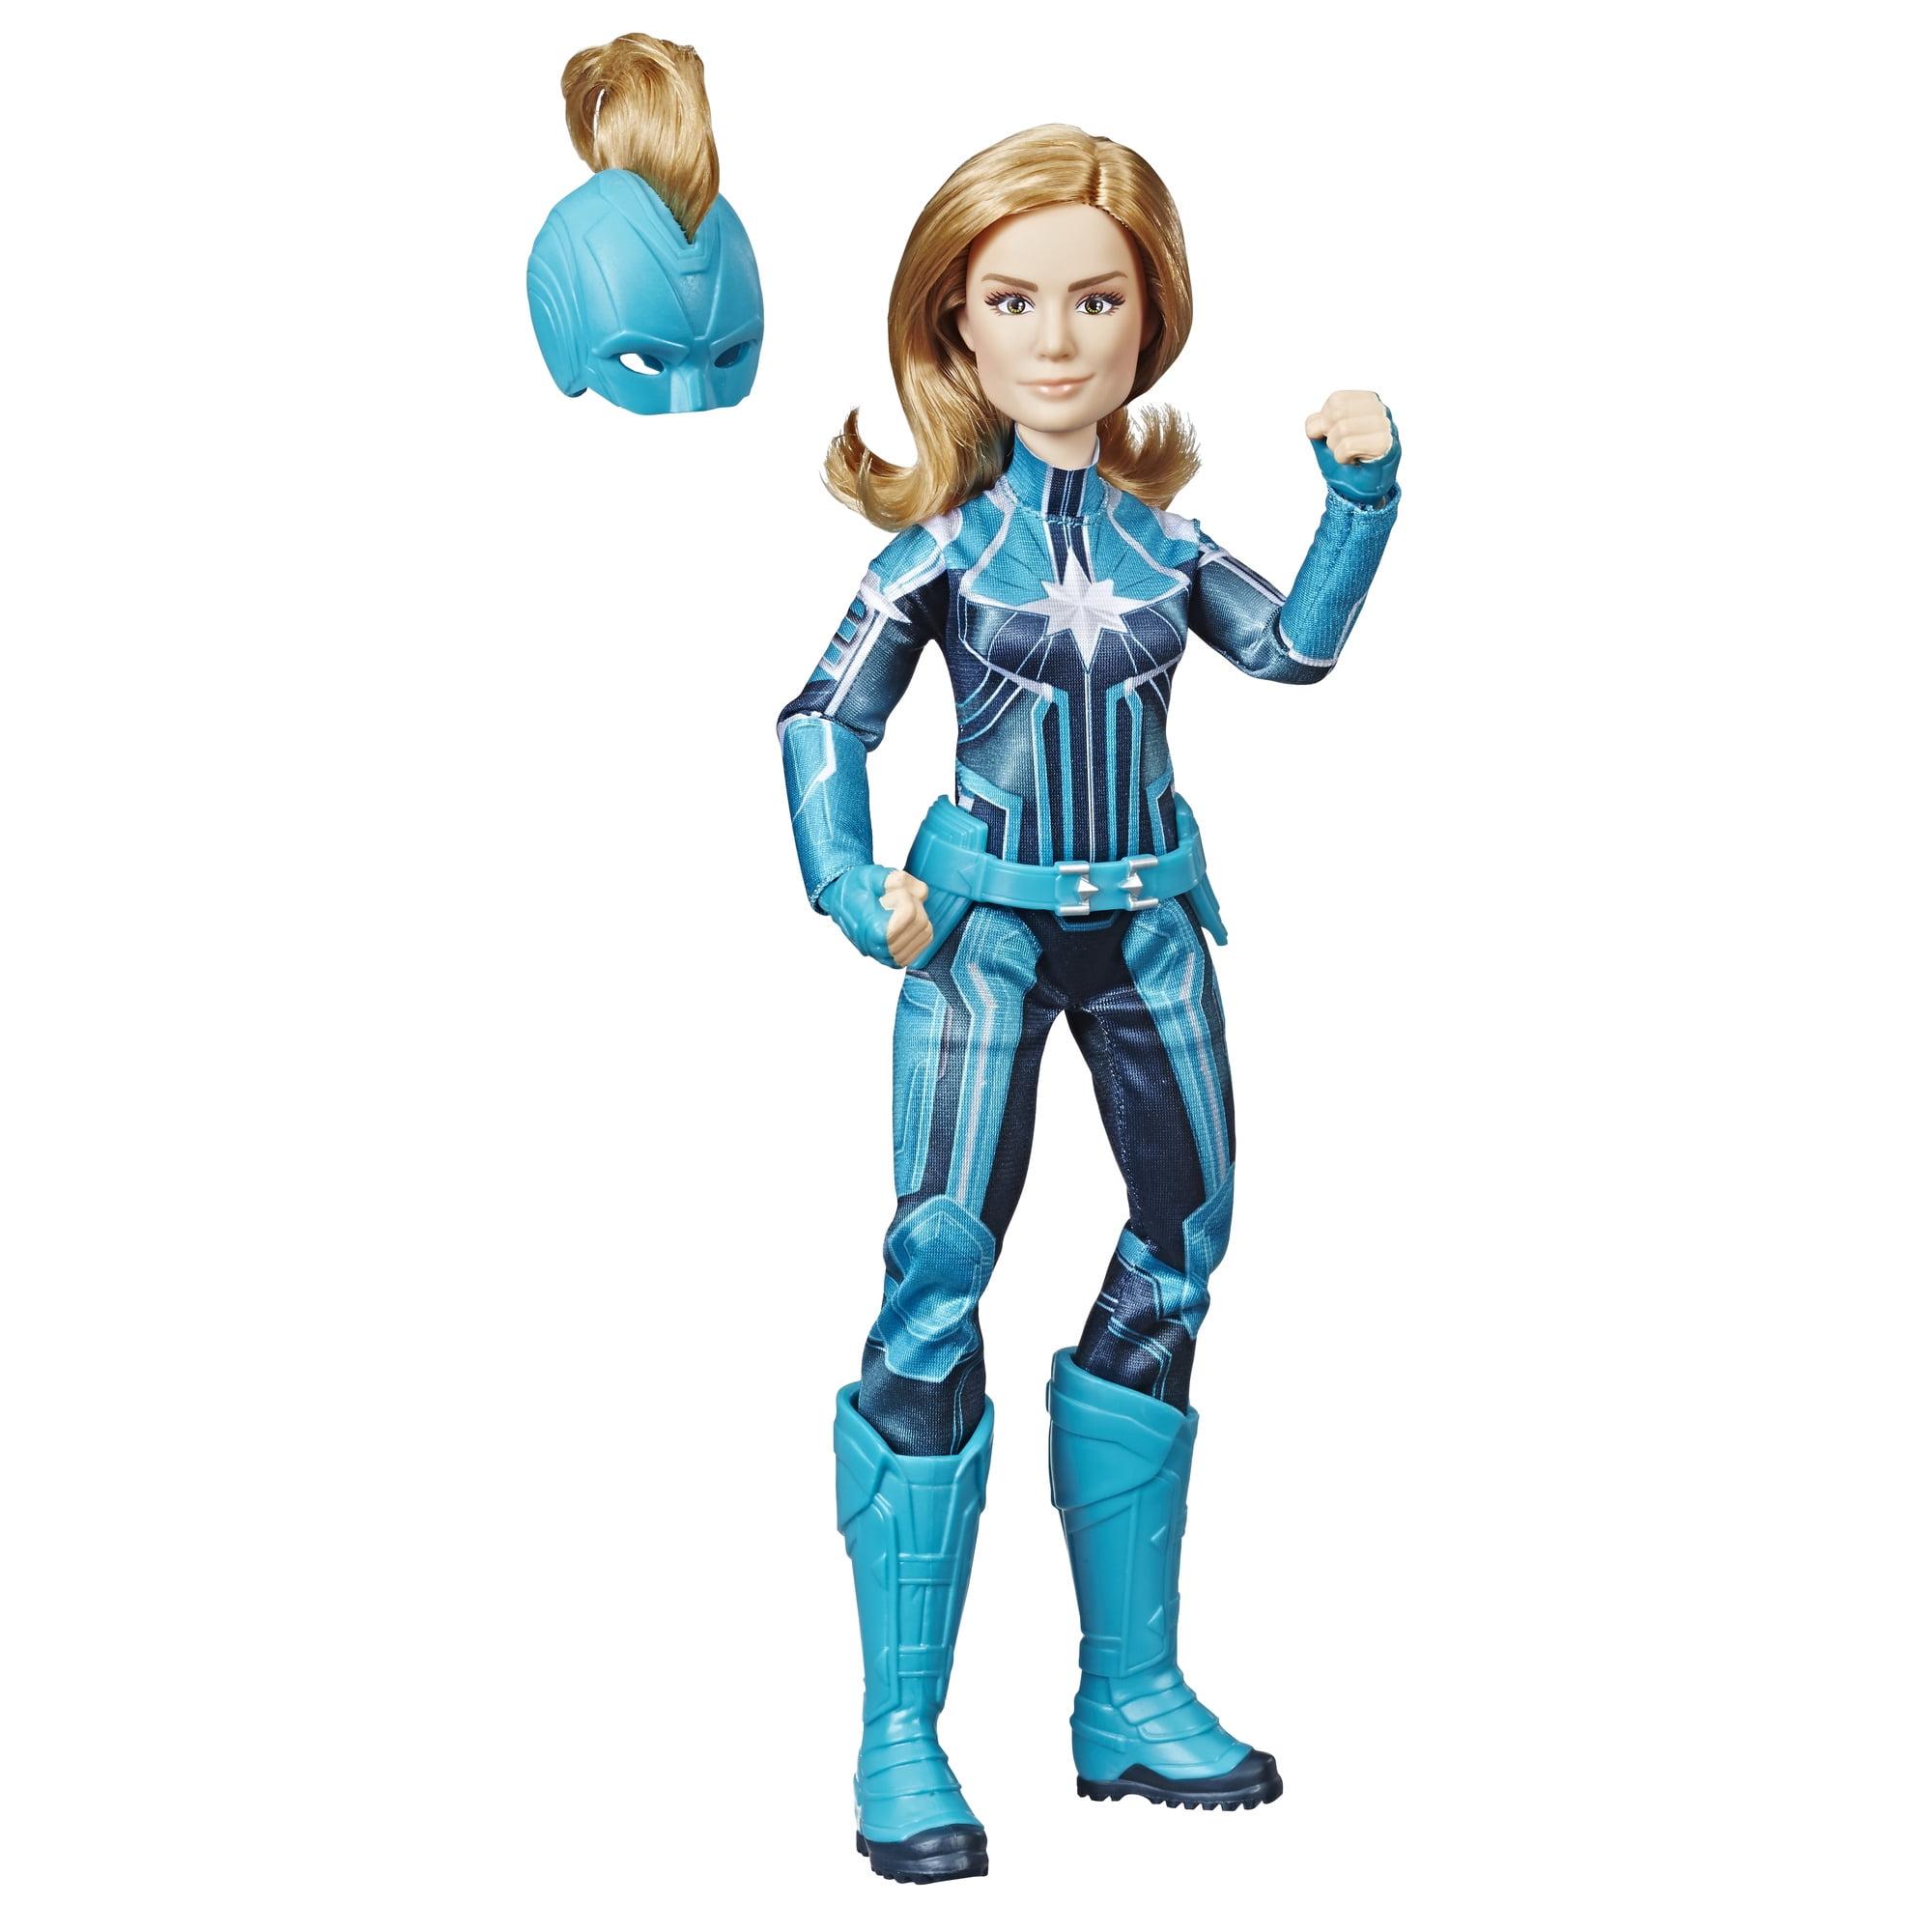 Hasbro Captain Marvel Starforce Legends 6 inch Action Figure for sale online 